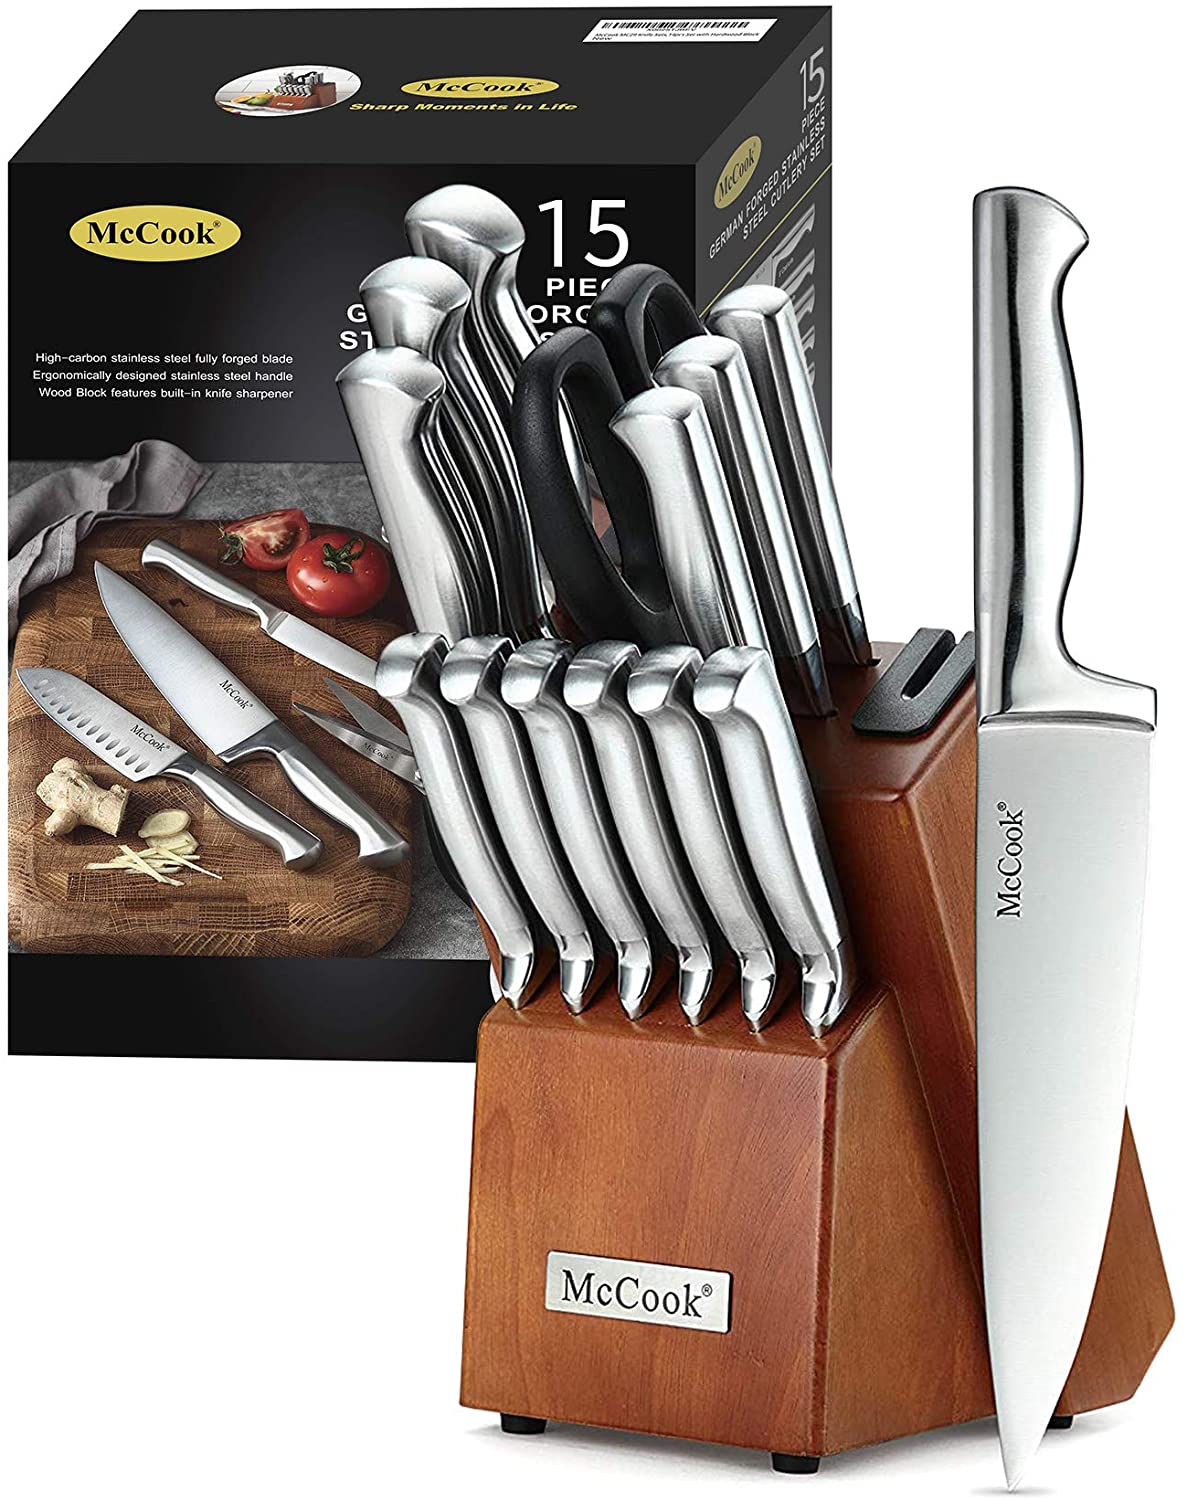 McCook MC29 15-Piece Kitchen Cutlery Knife Block Set Built-in Sharpener Stainless Steel - image 1 of 11